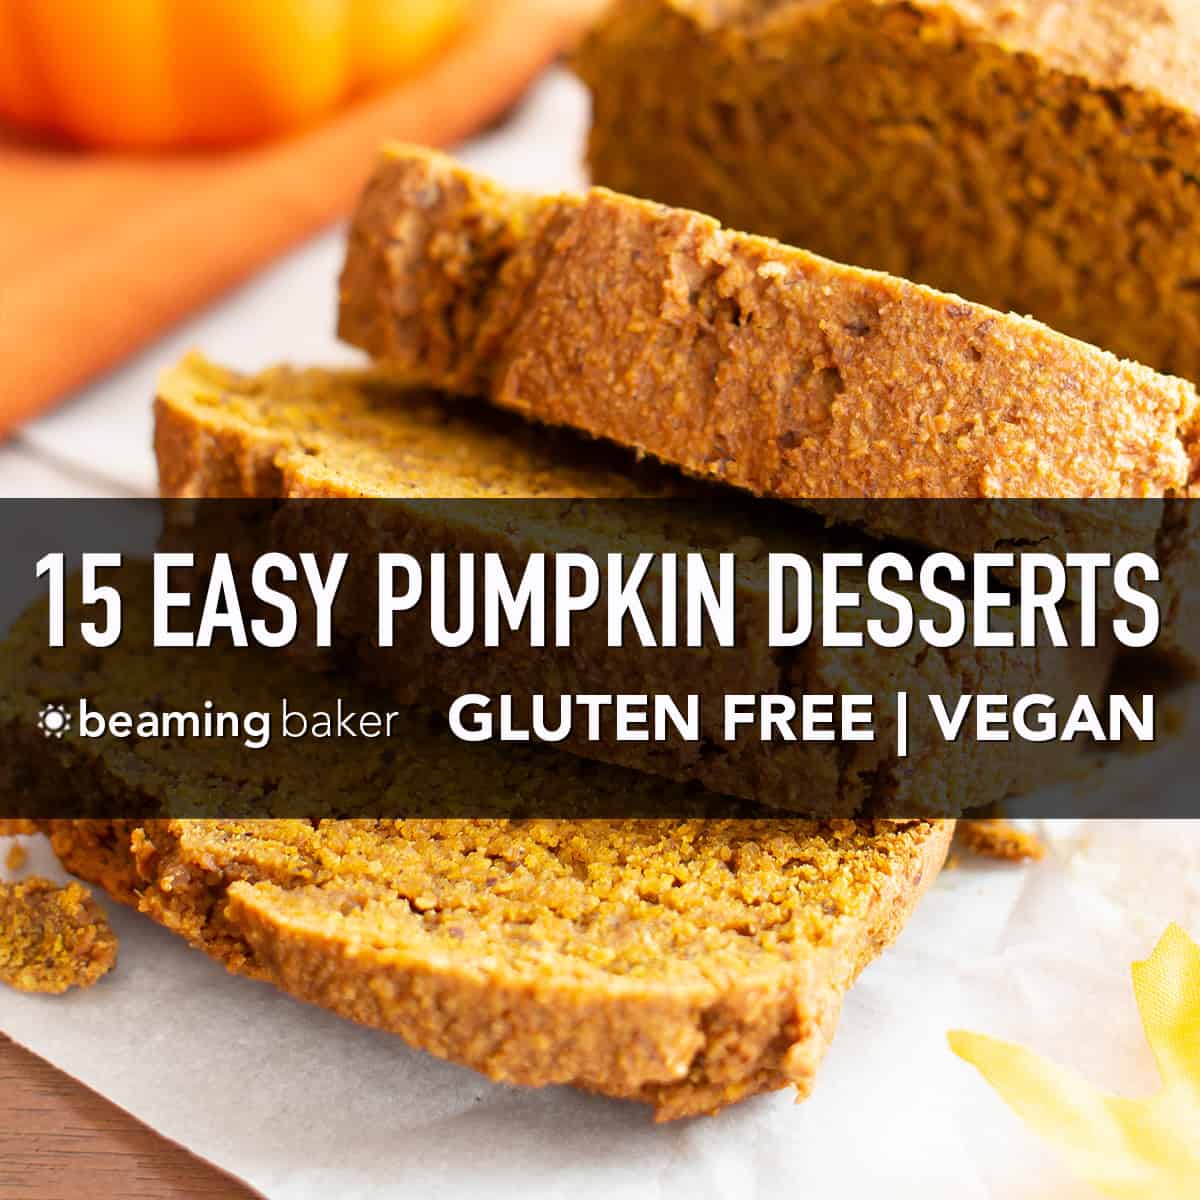 15 Vegan Easy Pumpkin Dessert Recipes (Healthy, Gluten-Free)